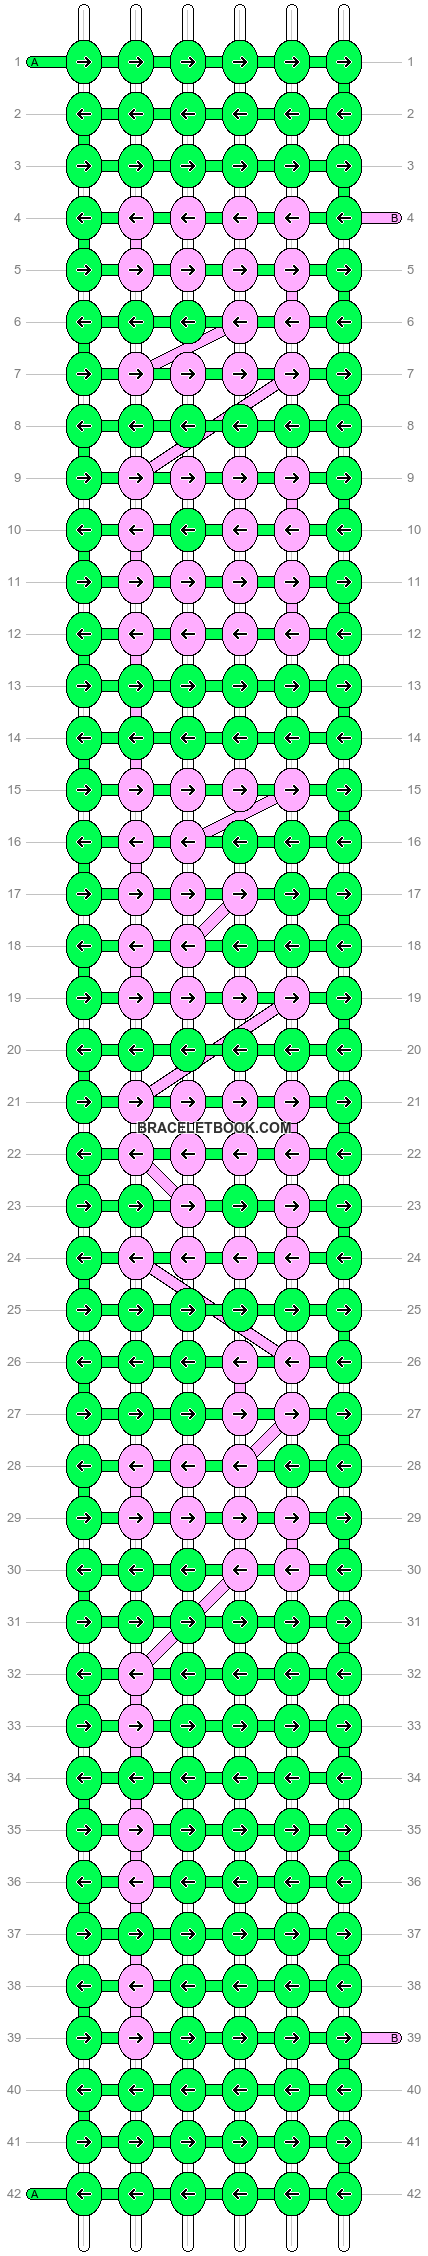 Alpha pattern #3723 variation #44069 pattern